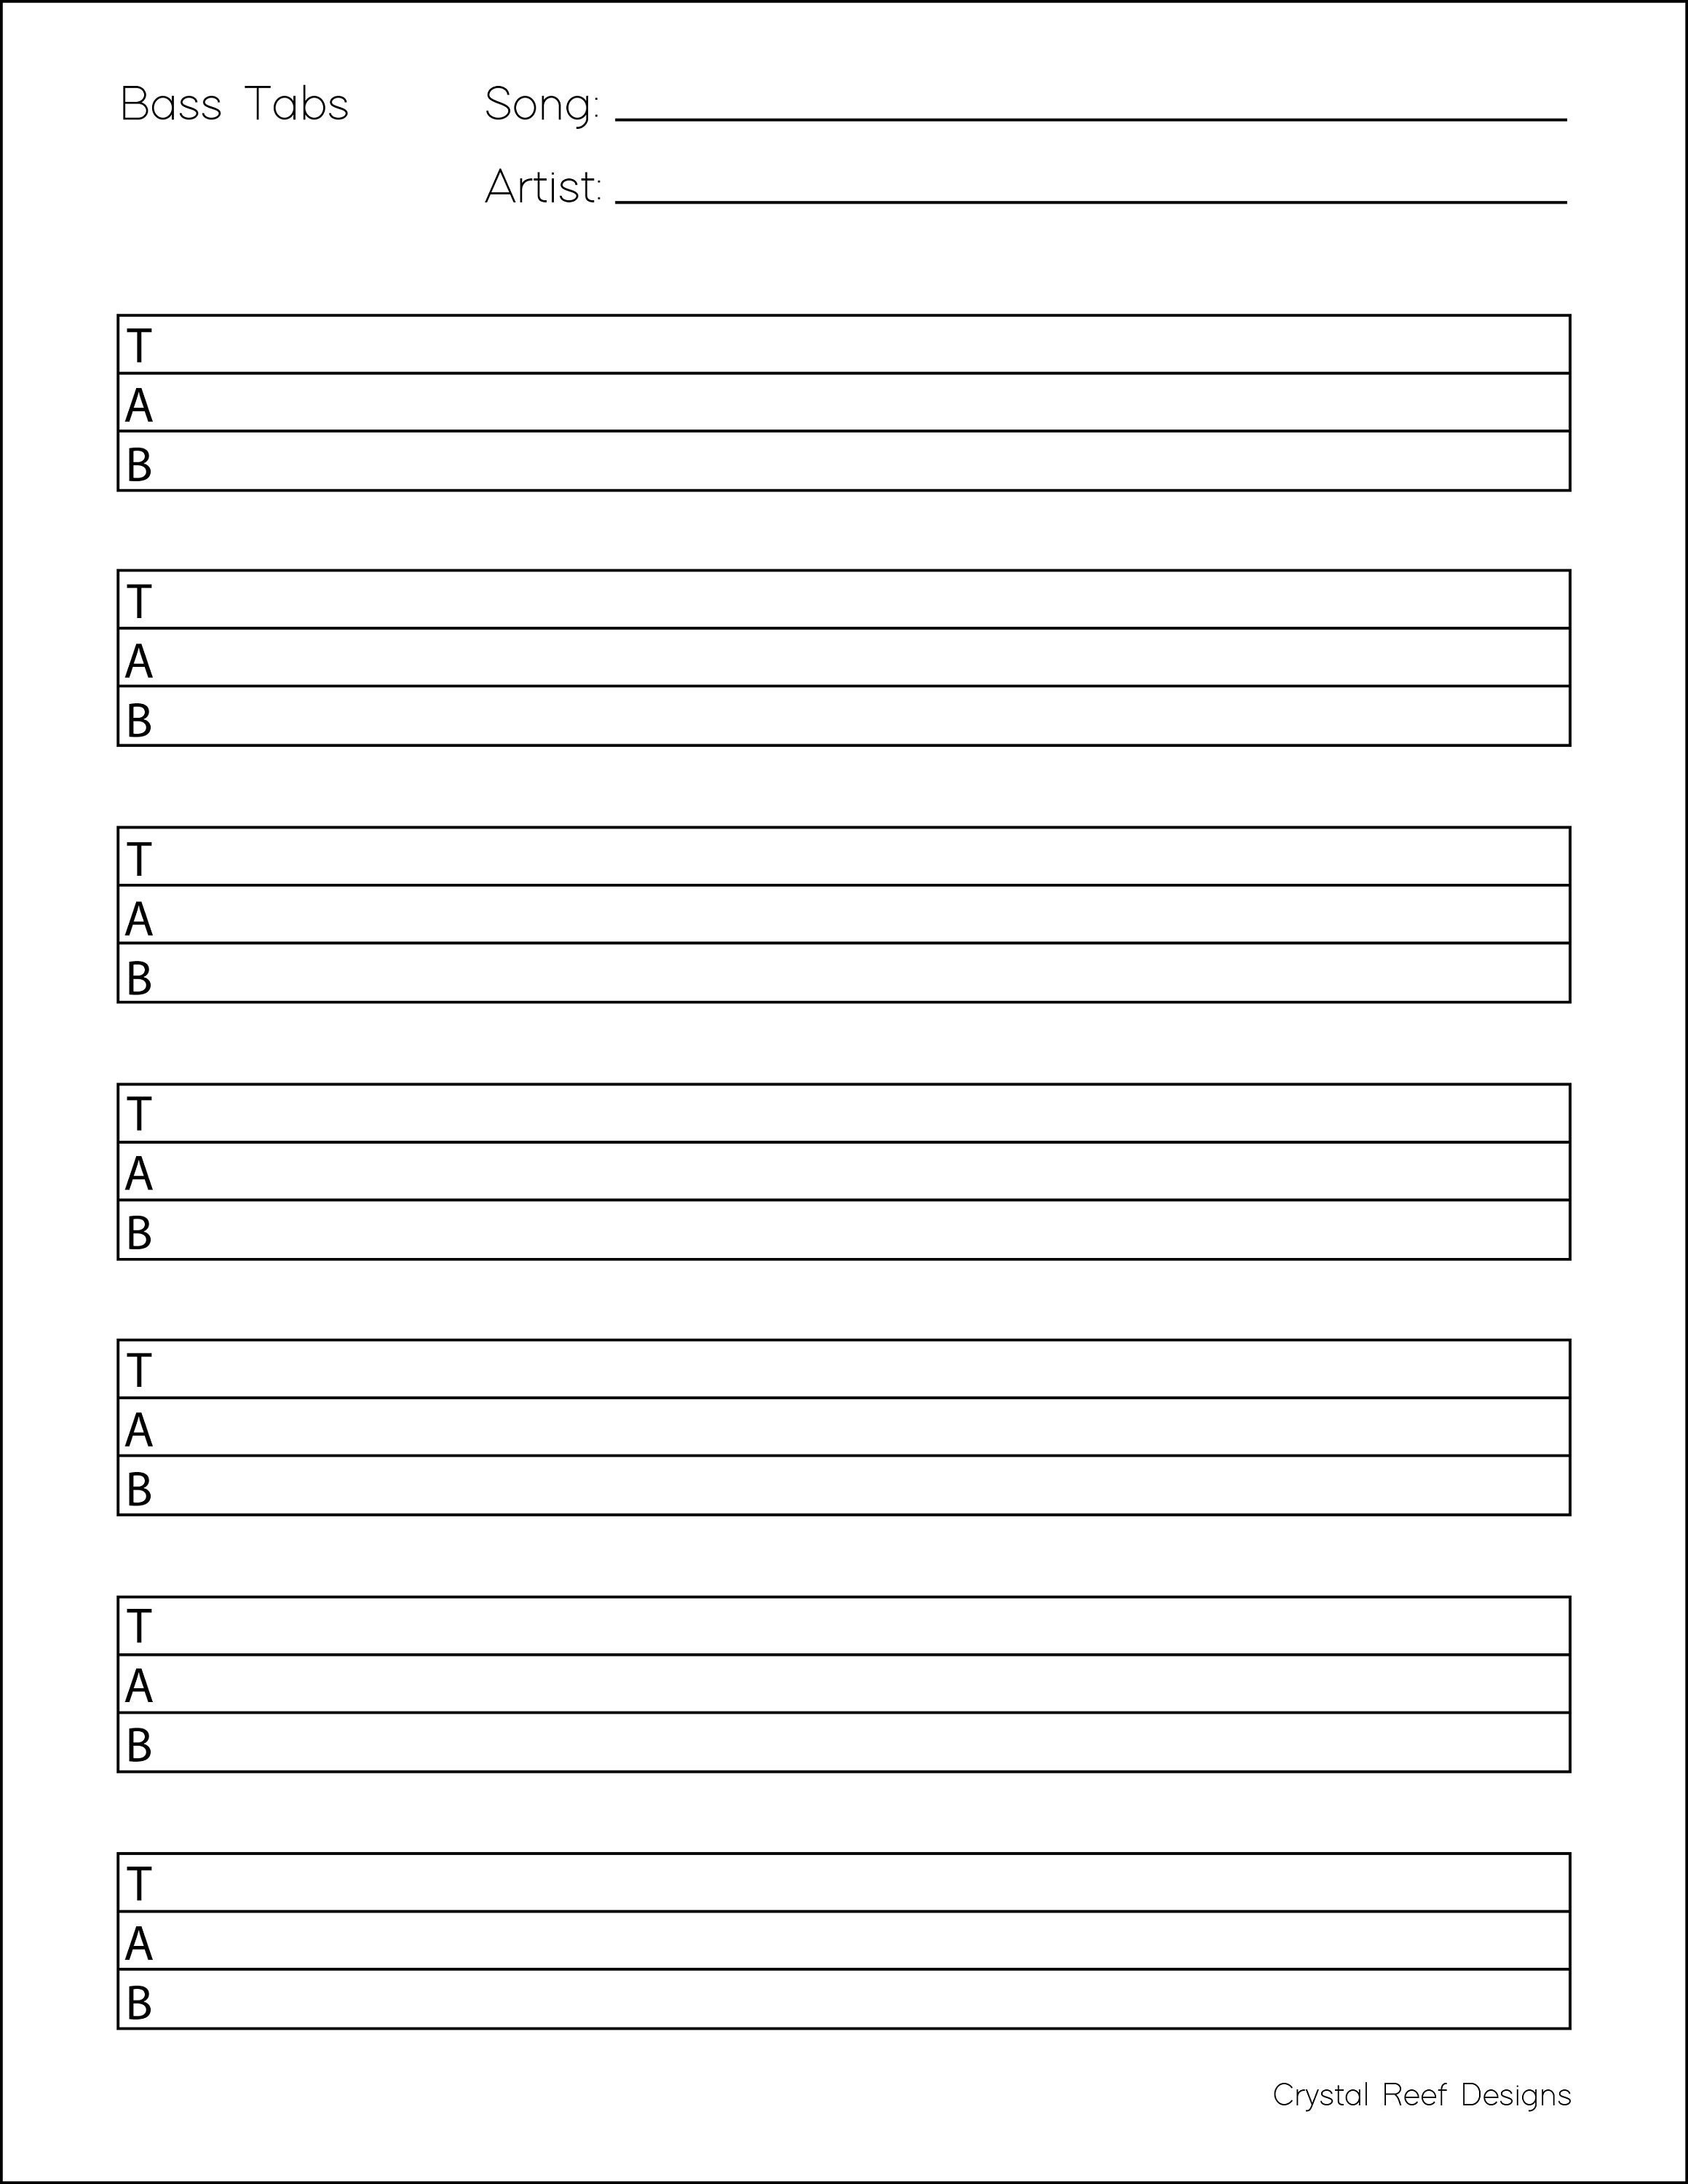 bass-tab-white-pages-pdf-download-vanmarcketradesupplynearme